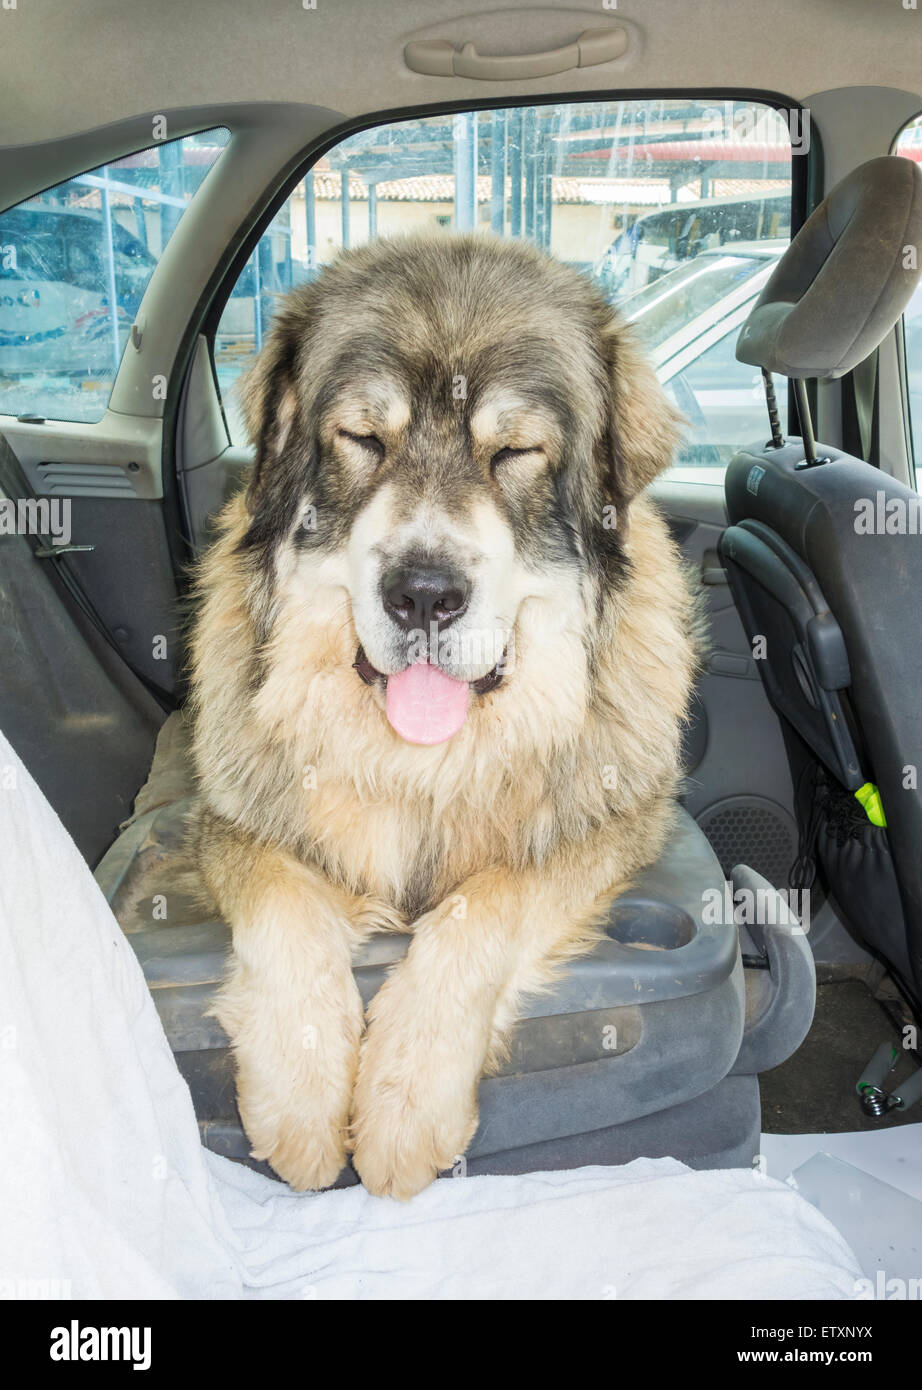 80 kilo Pyrenean Mastiff (Mastin Pirineo) dog on back seat of car on a hot day Stock Photo